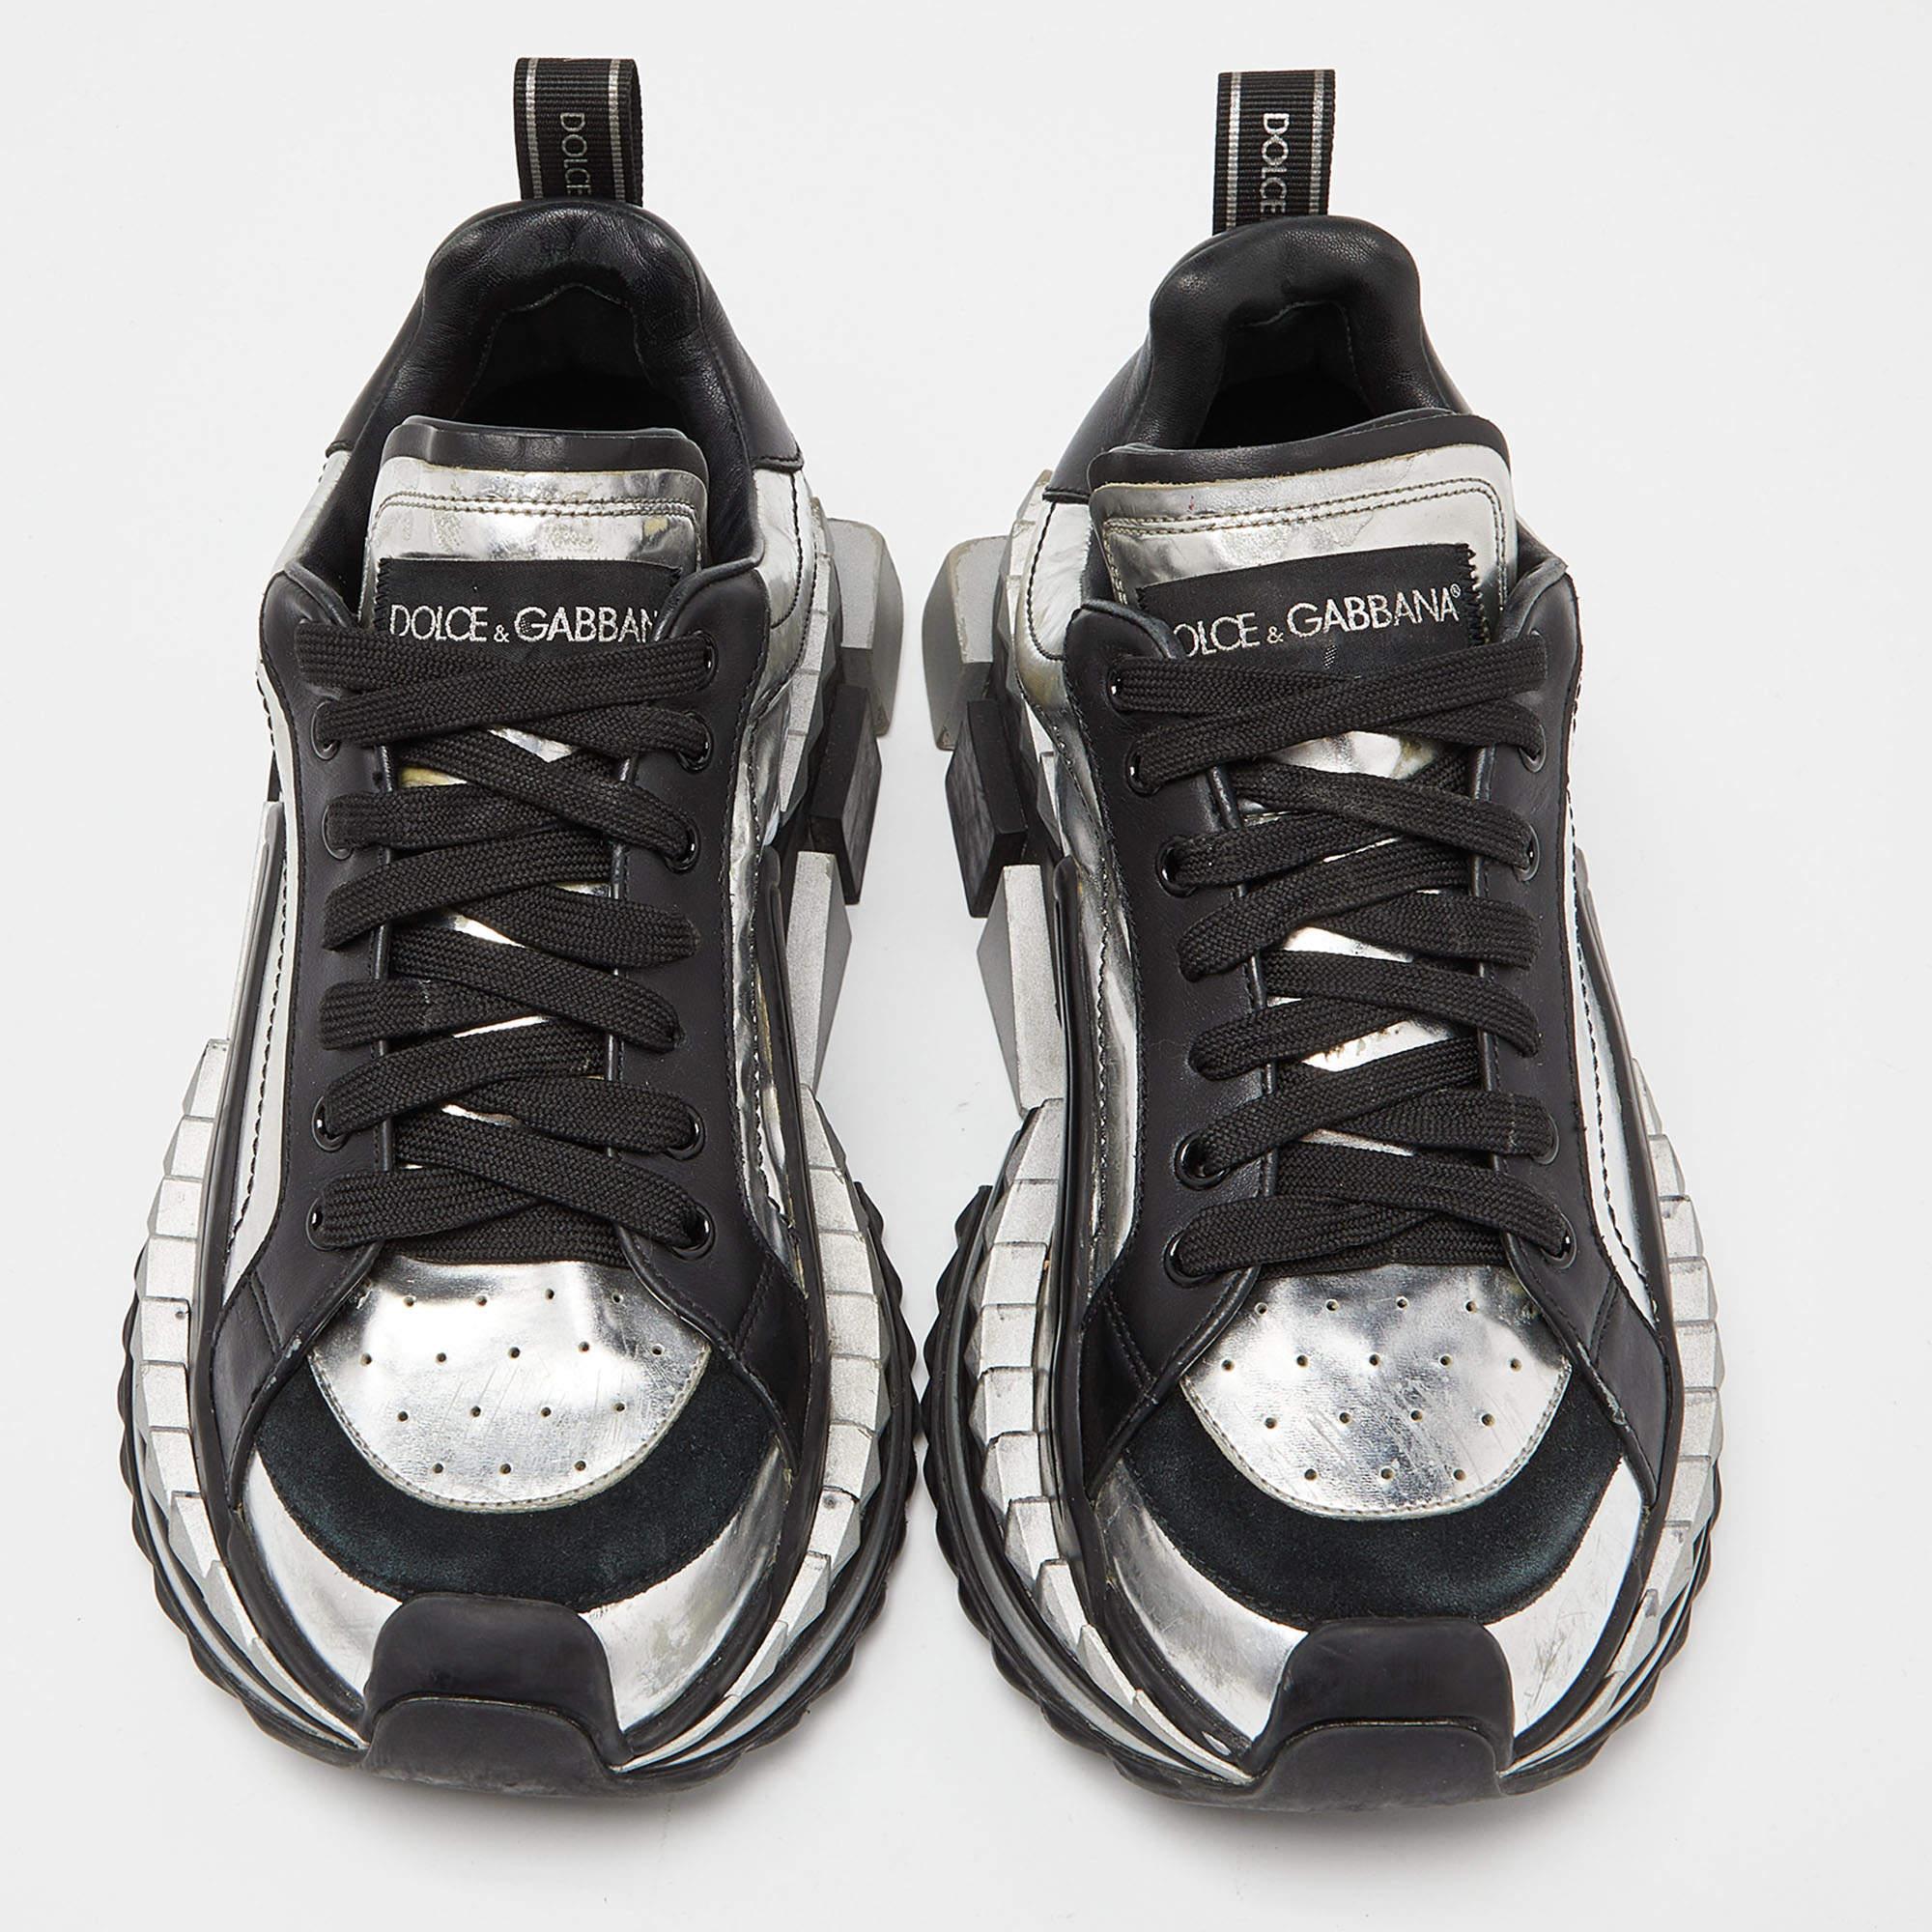 Dolce & Gabbana Black/Silver Leather and Patent Super King Platform Sneakers Siz In Fair Condition For Sale In Dubai, Al Qouz 2